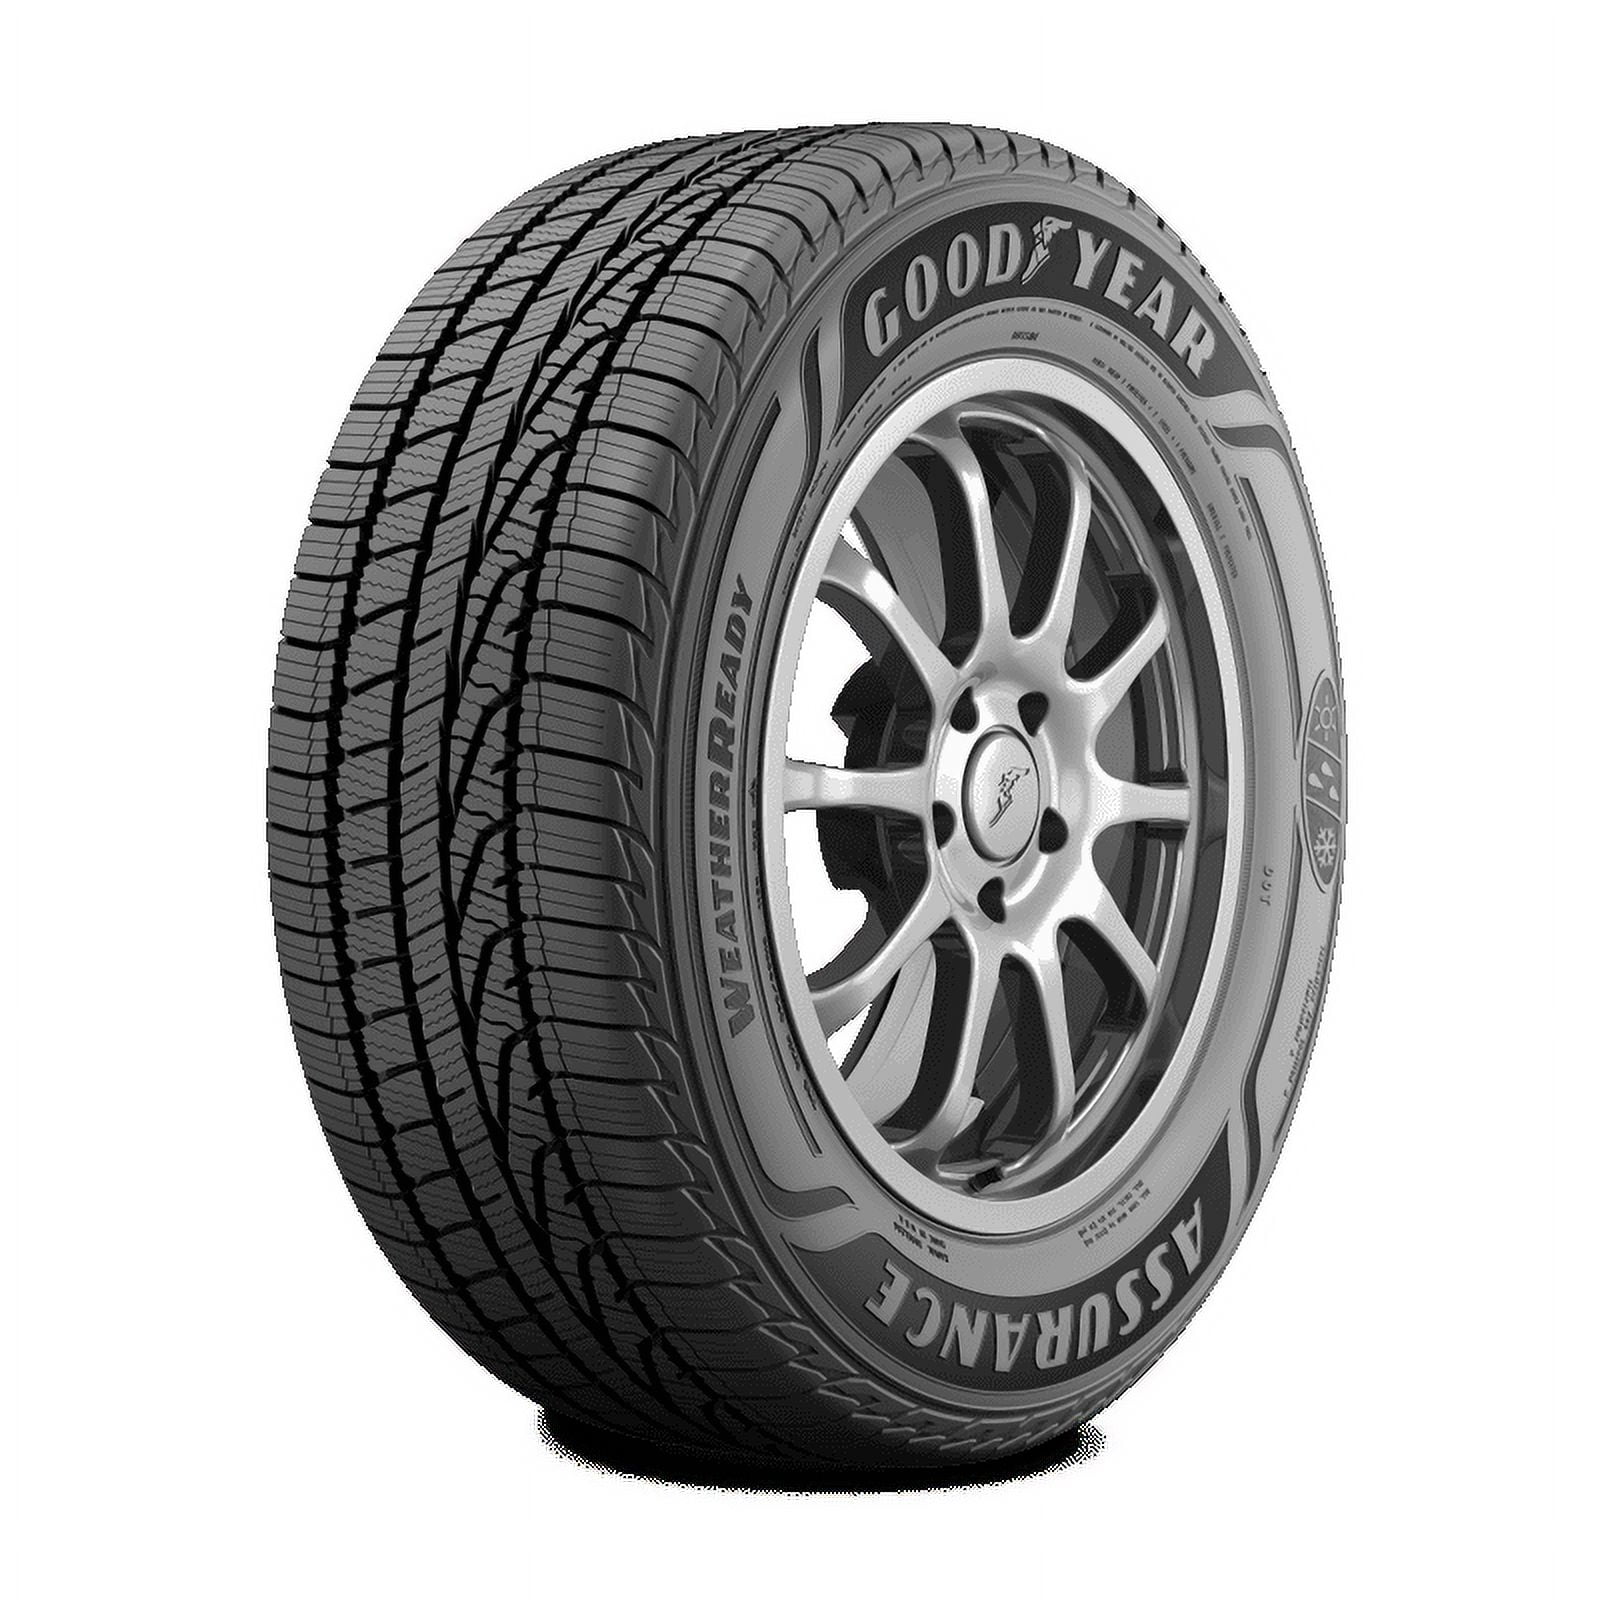 Goodyear Assurance Weatherready 215/60R16 95H All-Season Tire